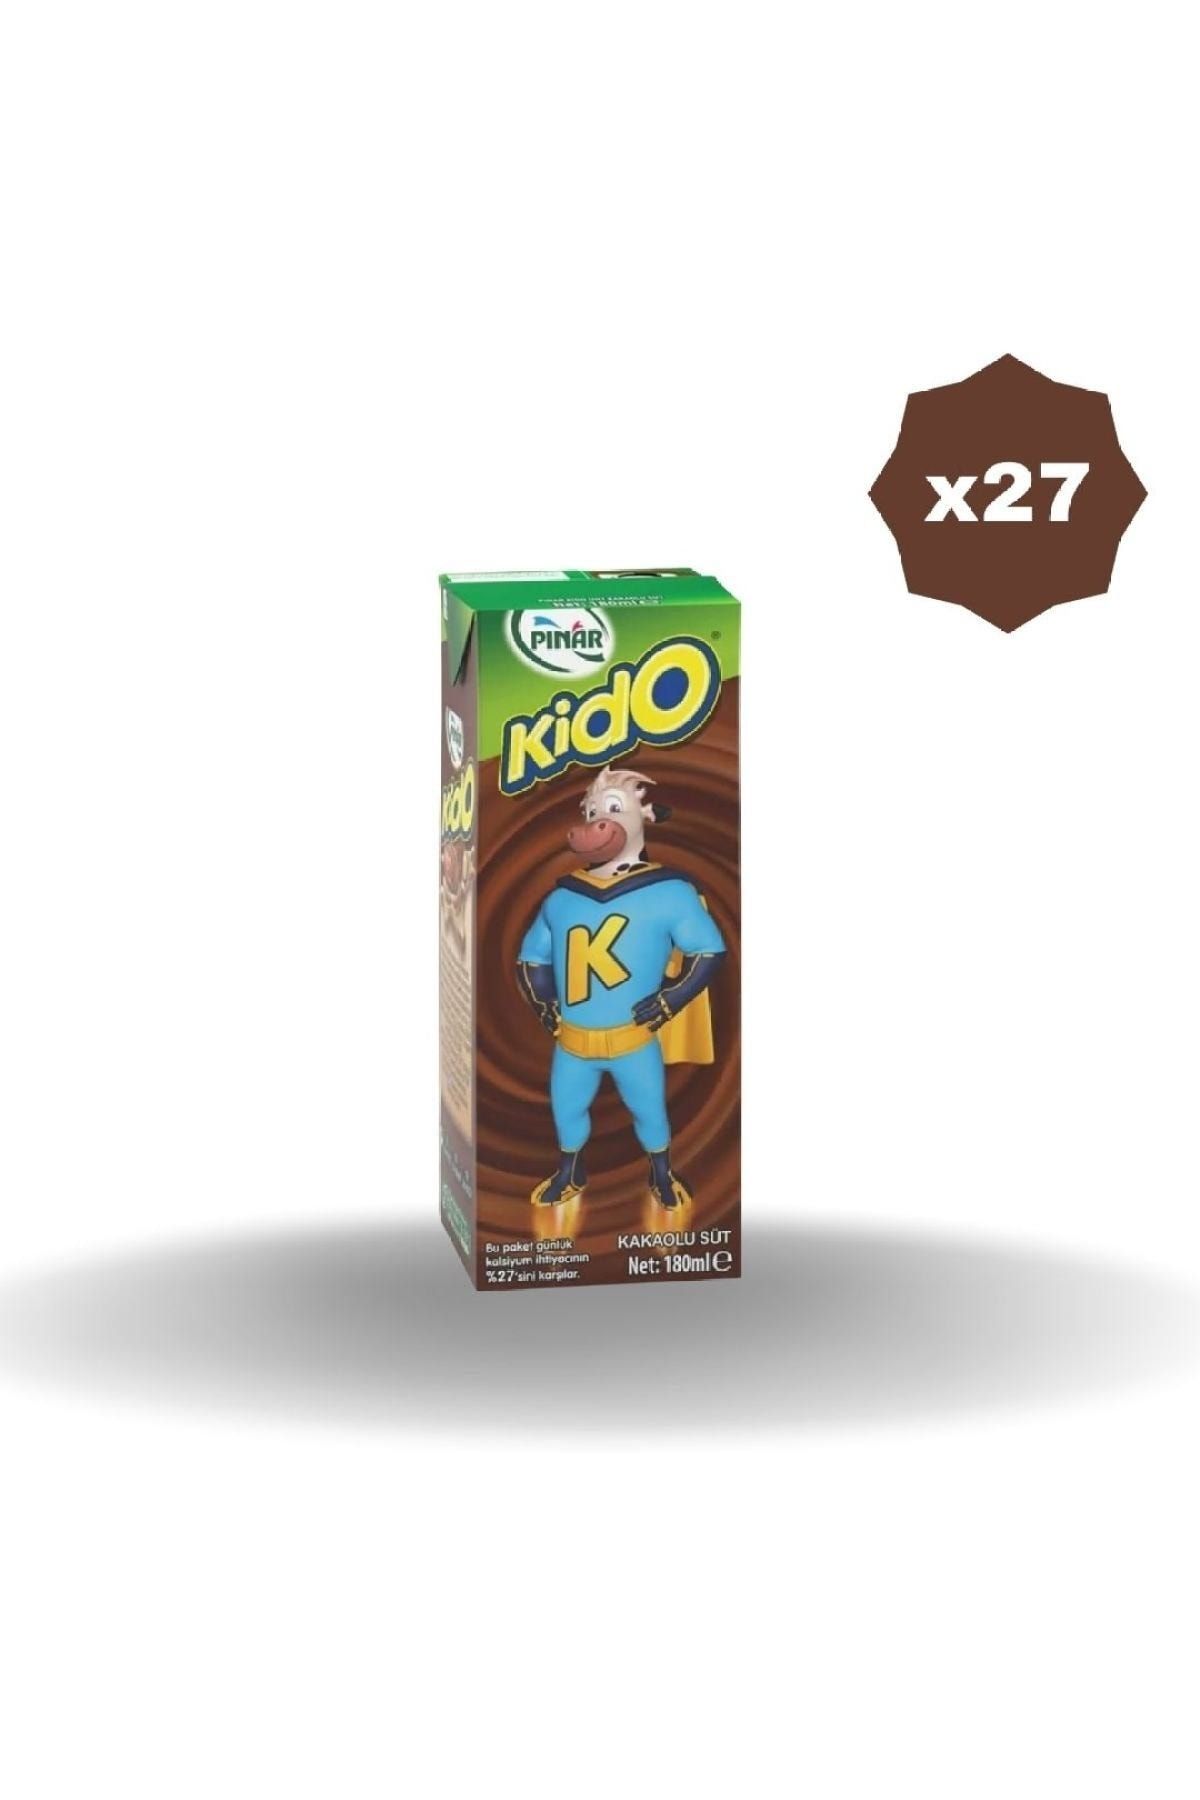 Pınar Kido Süt Çikolatalı 180 Ml X 27 Adet